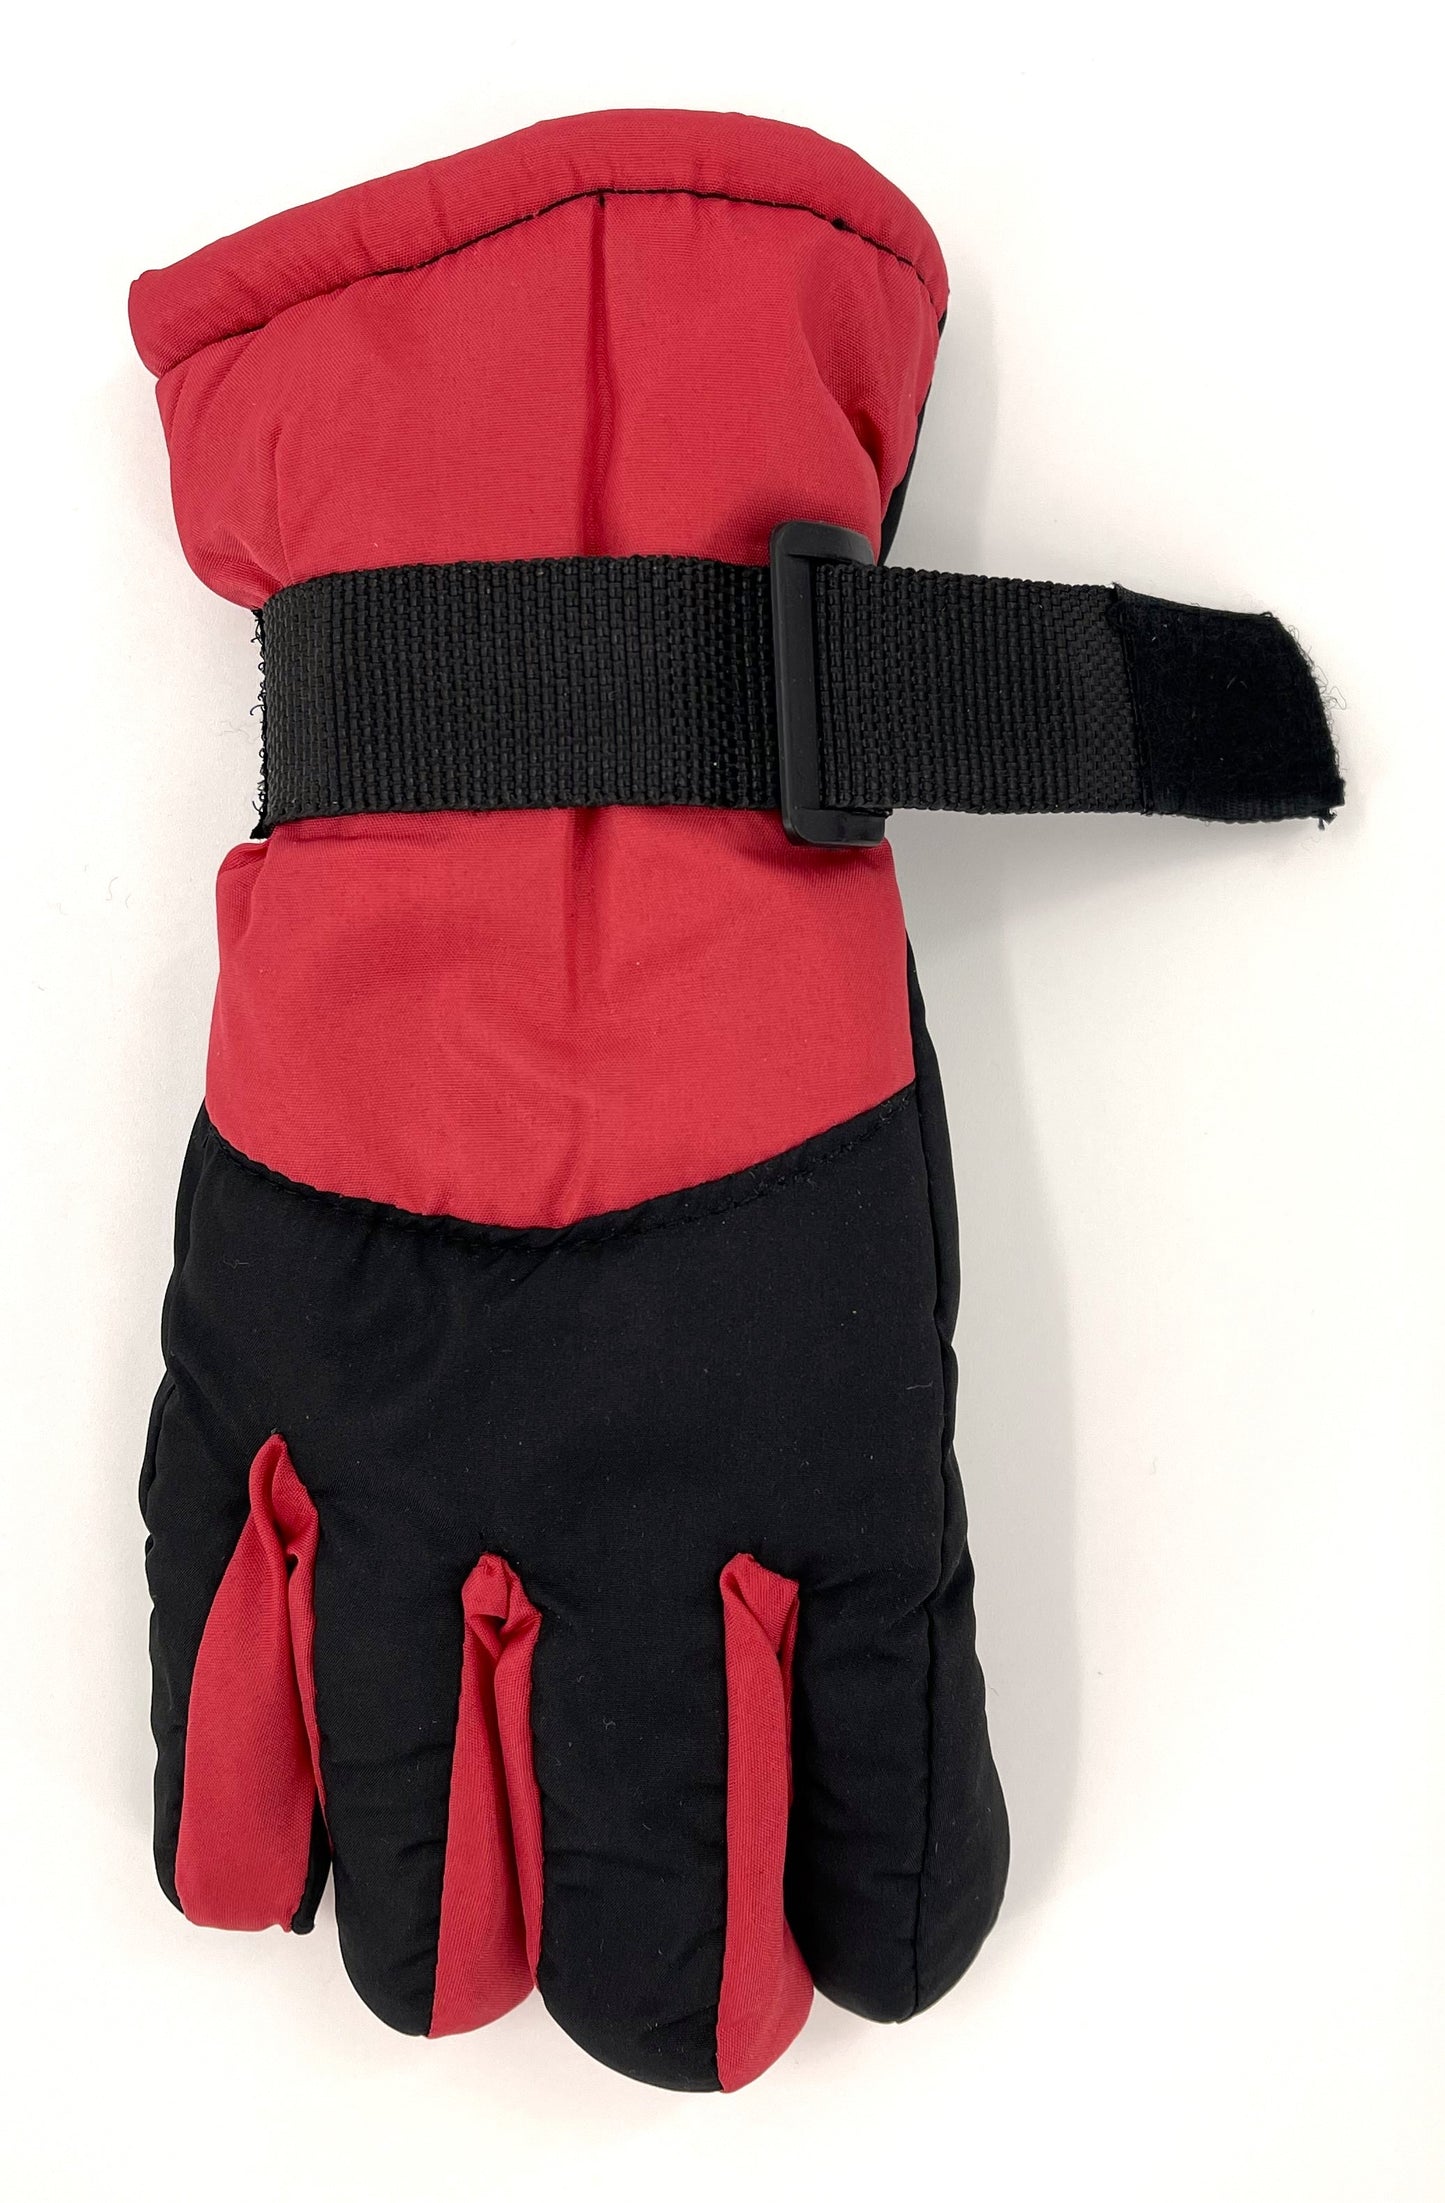 Boys Ski Snowboarding Winter Gloves - Palm/Thumb Grips & Adjustable Wrist Strap